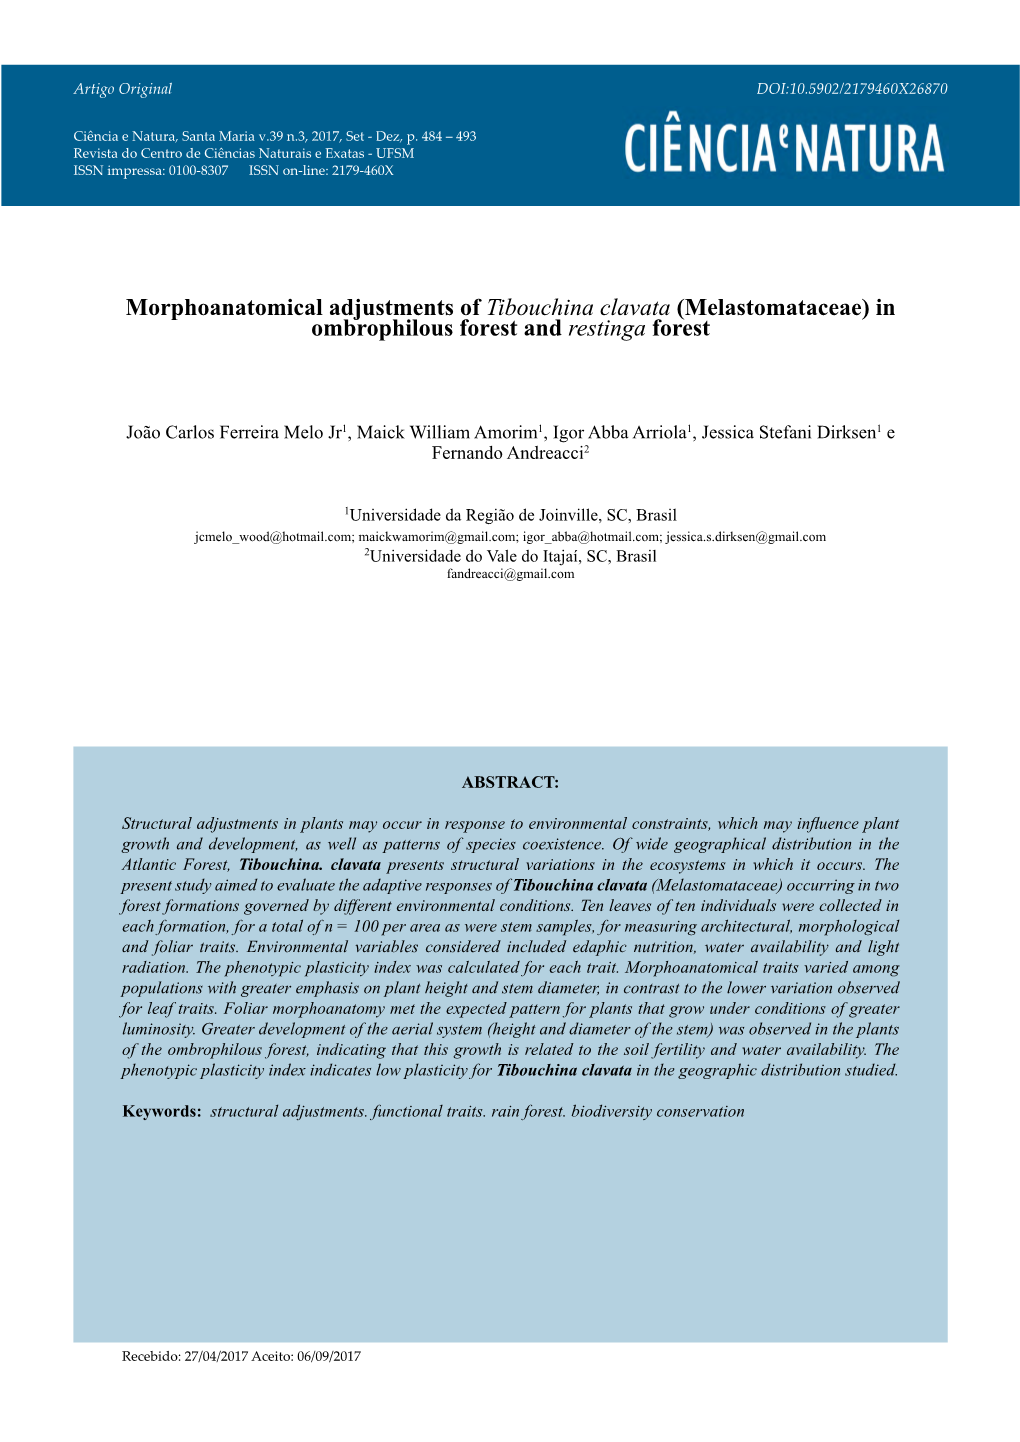 Morphoanatomical Adjustments of Tibouchina Clavata (Melastomataceae) in Ombrophilous Forest and Restinga Forest